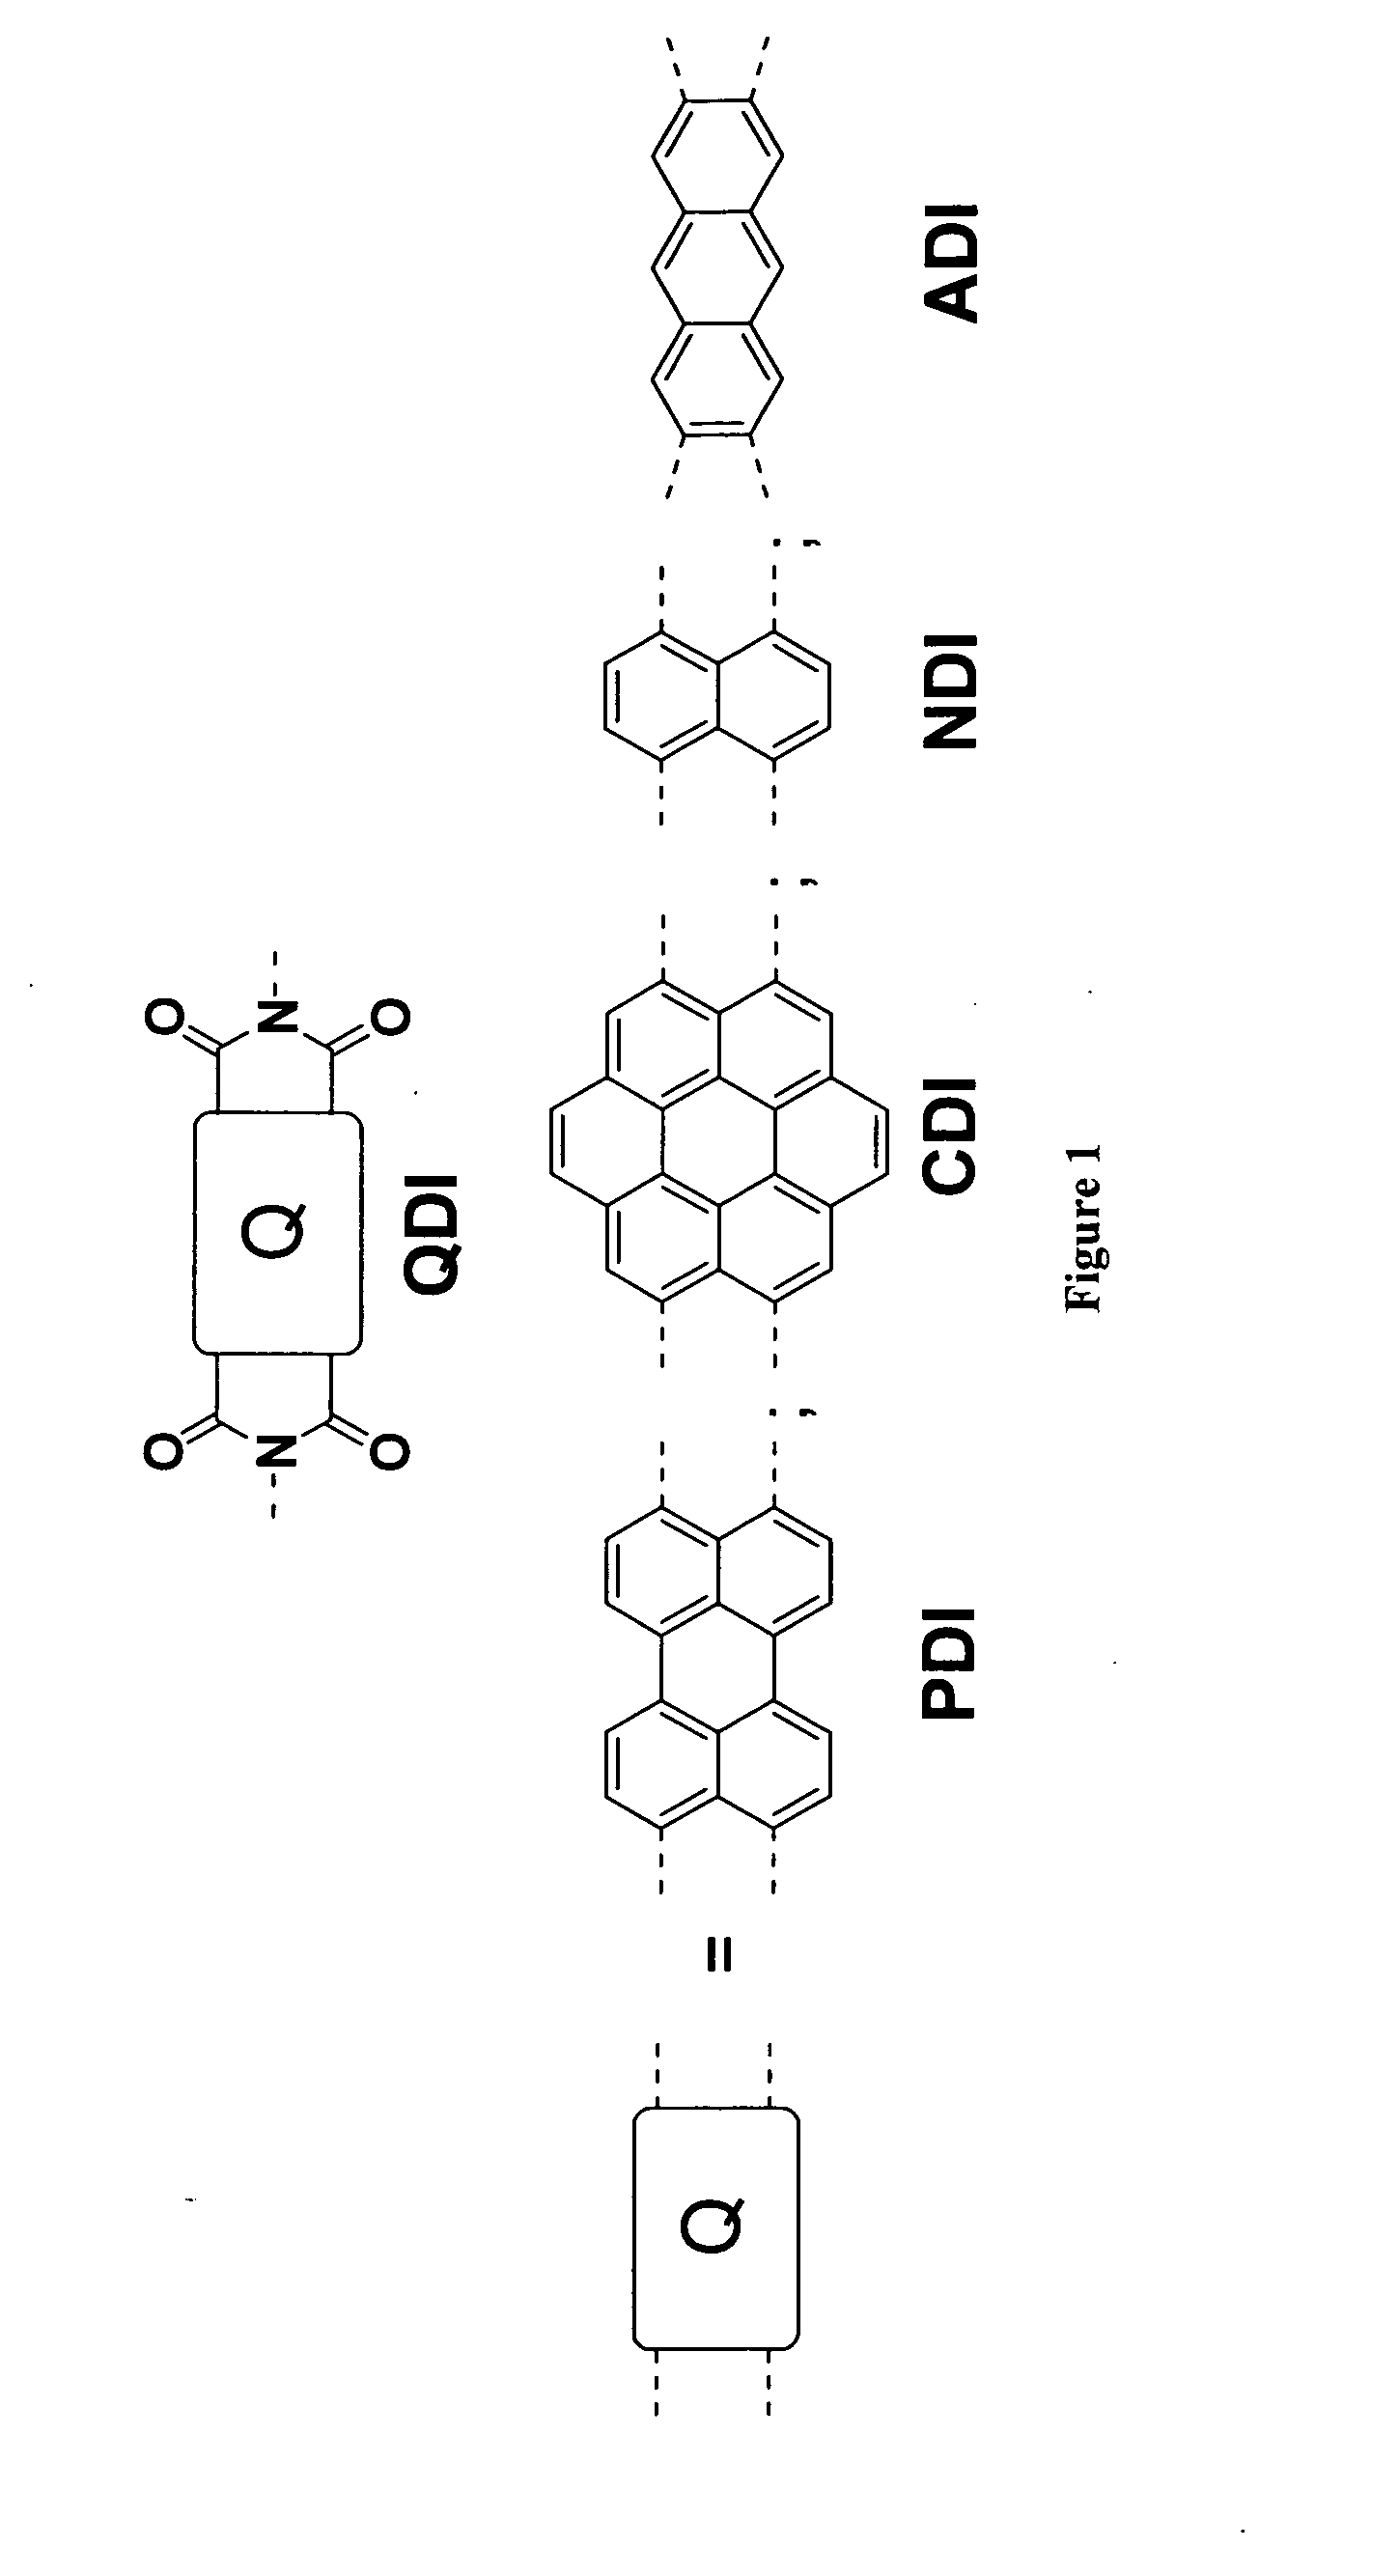 Methods for preparing arene-BIS (dicarboximide)-based semiconducting materials and related intermediates for preparing same